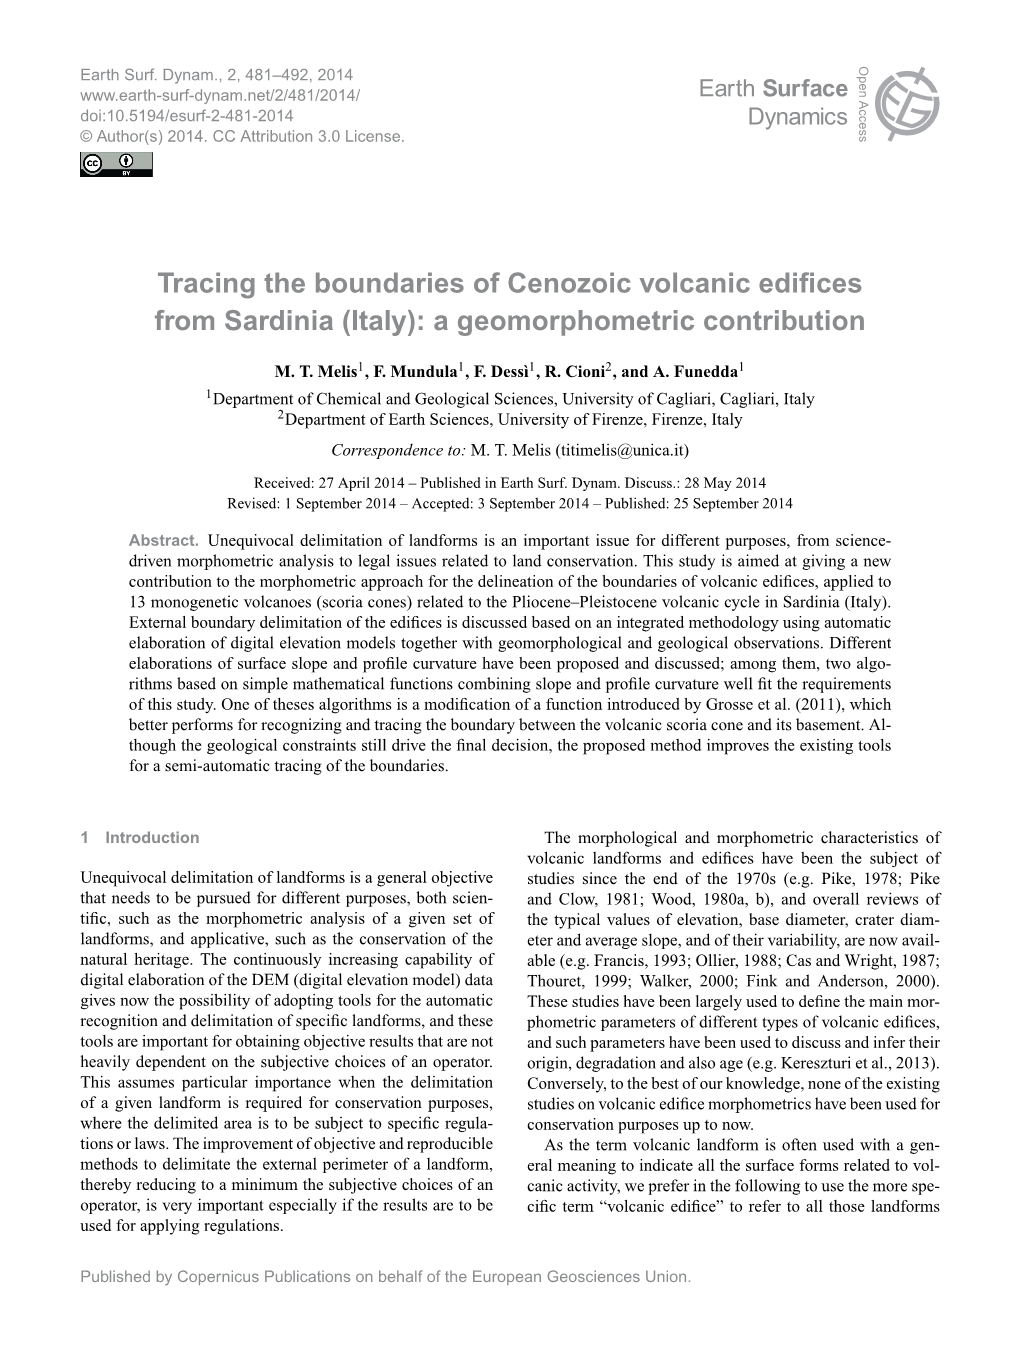 Tracing the Boundaries of Cenozoic Volcanic Edifices from Sardinia (Italy